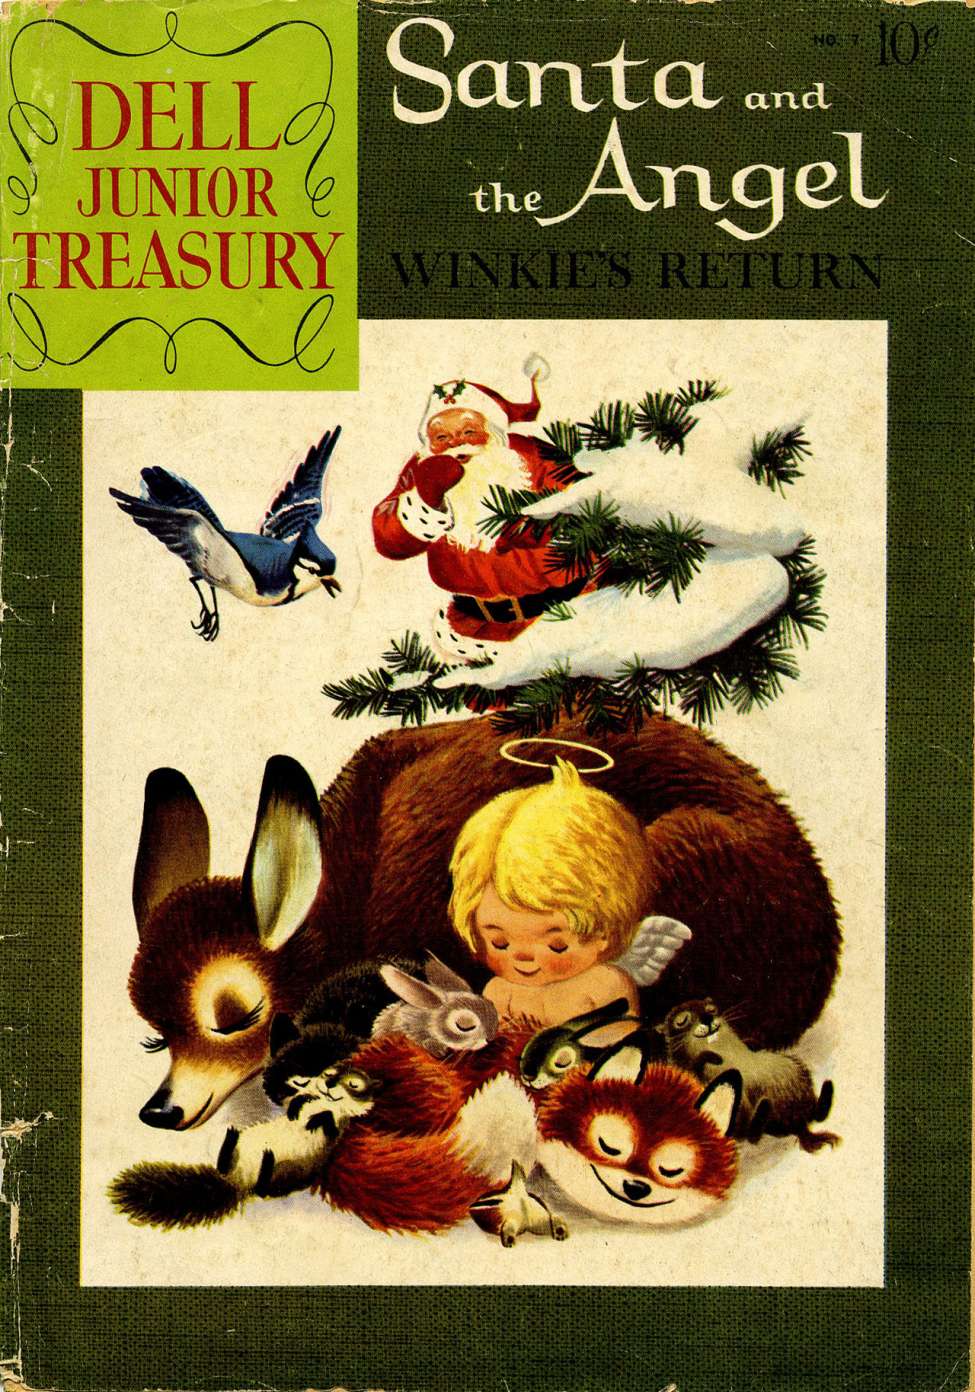 Book Cover For Dell Junior Treasury 7 - Santa and the Angel